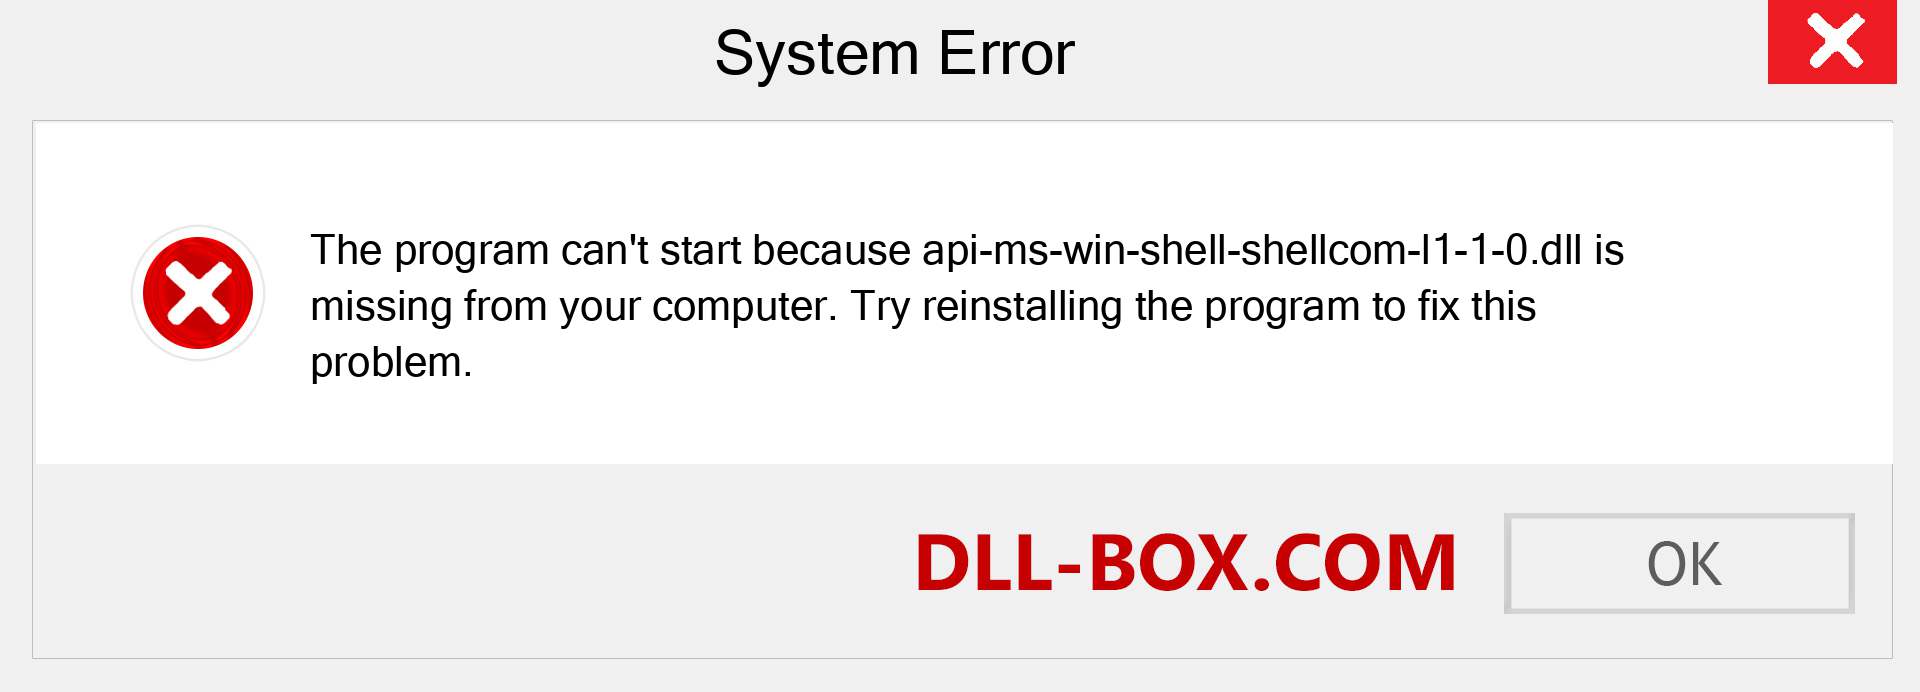  api-ms-win-shell-shellcom-l1-1-0.dll file is missing?. Download for Windows 7, 8, 10 - Fix  api-ms-win-shell-shellcom-l1-1-0 dll Missing Error on Windows, photos, images